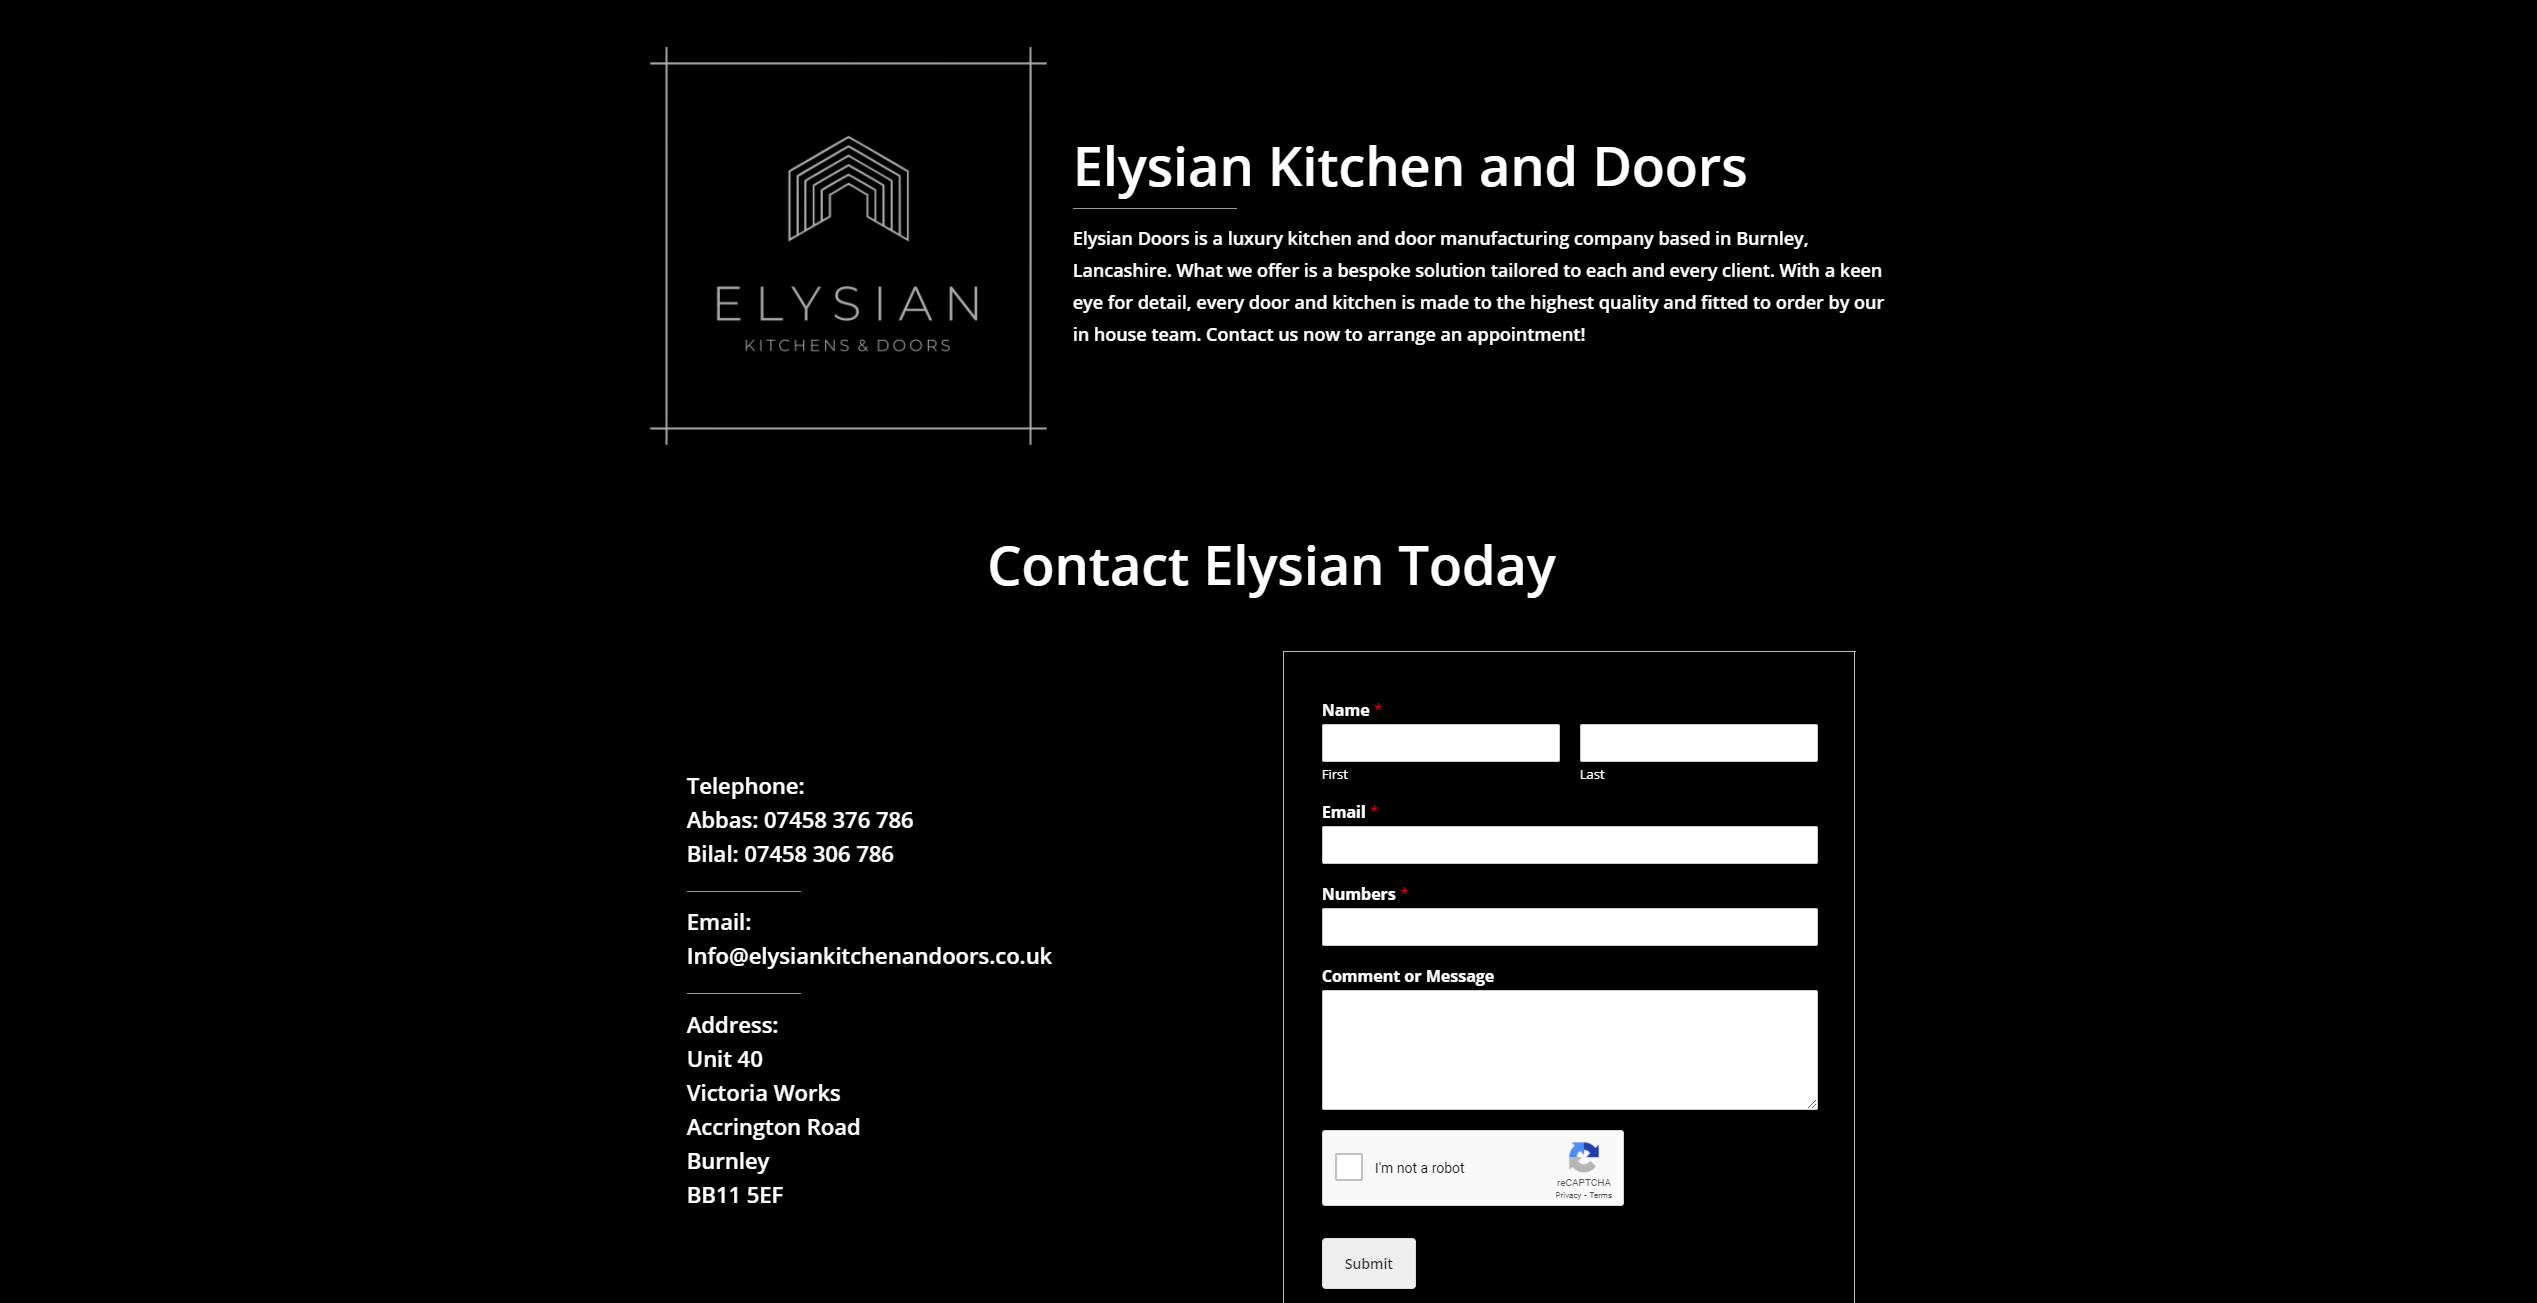 Elysian Kitchens and Doors